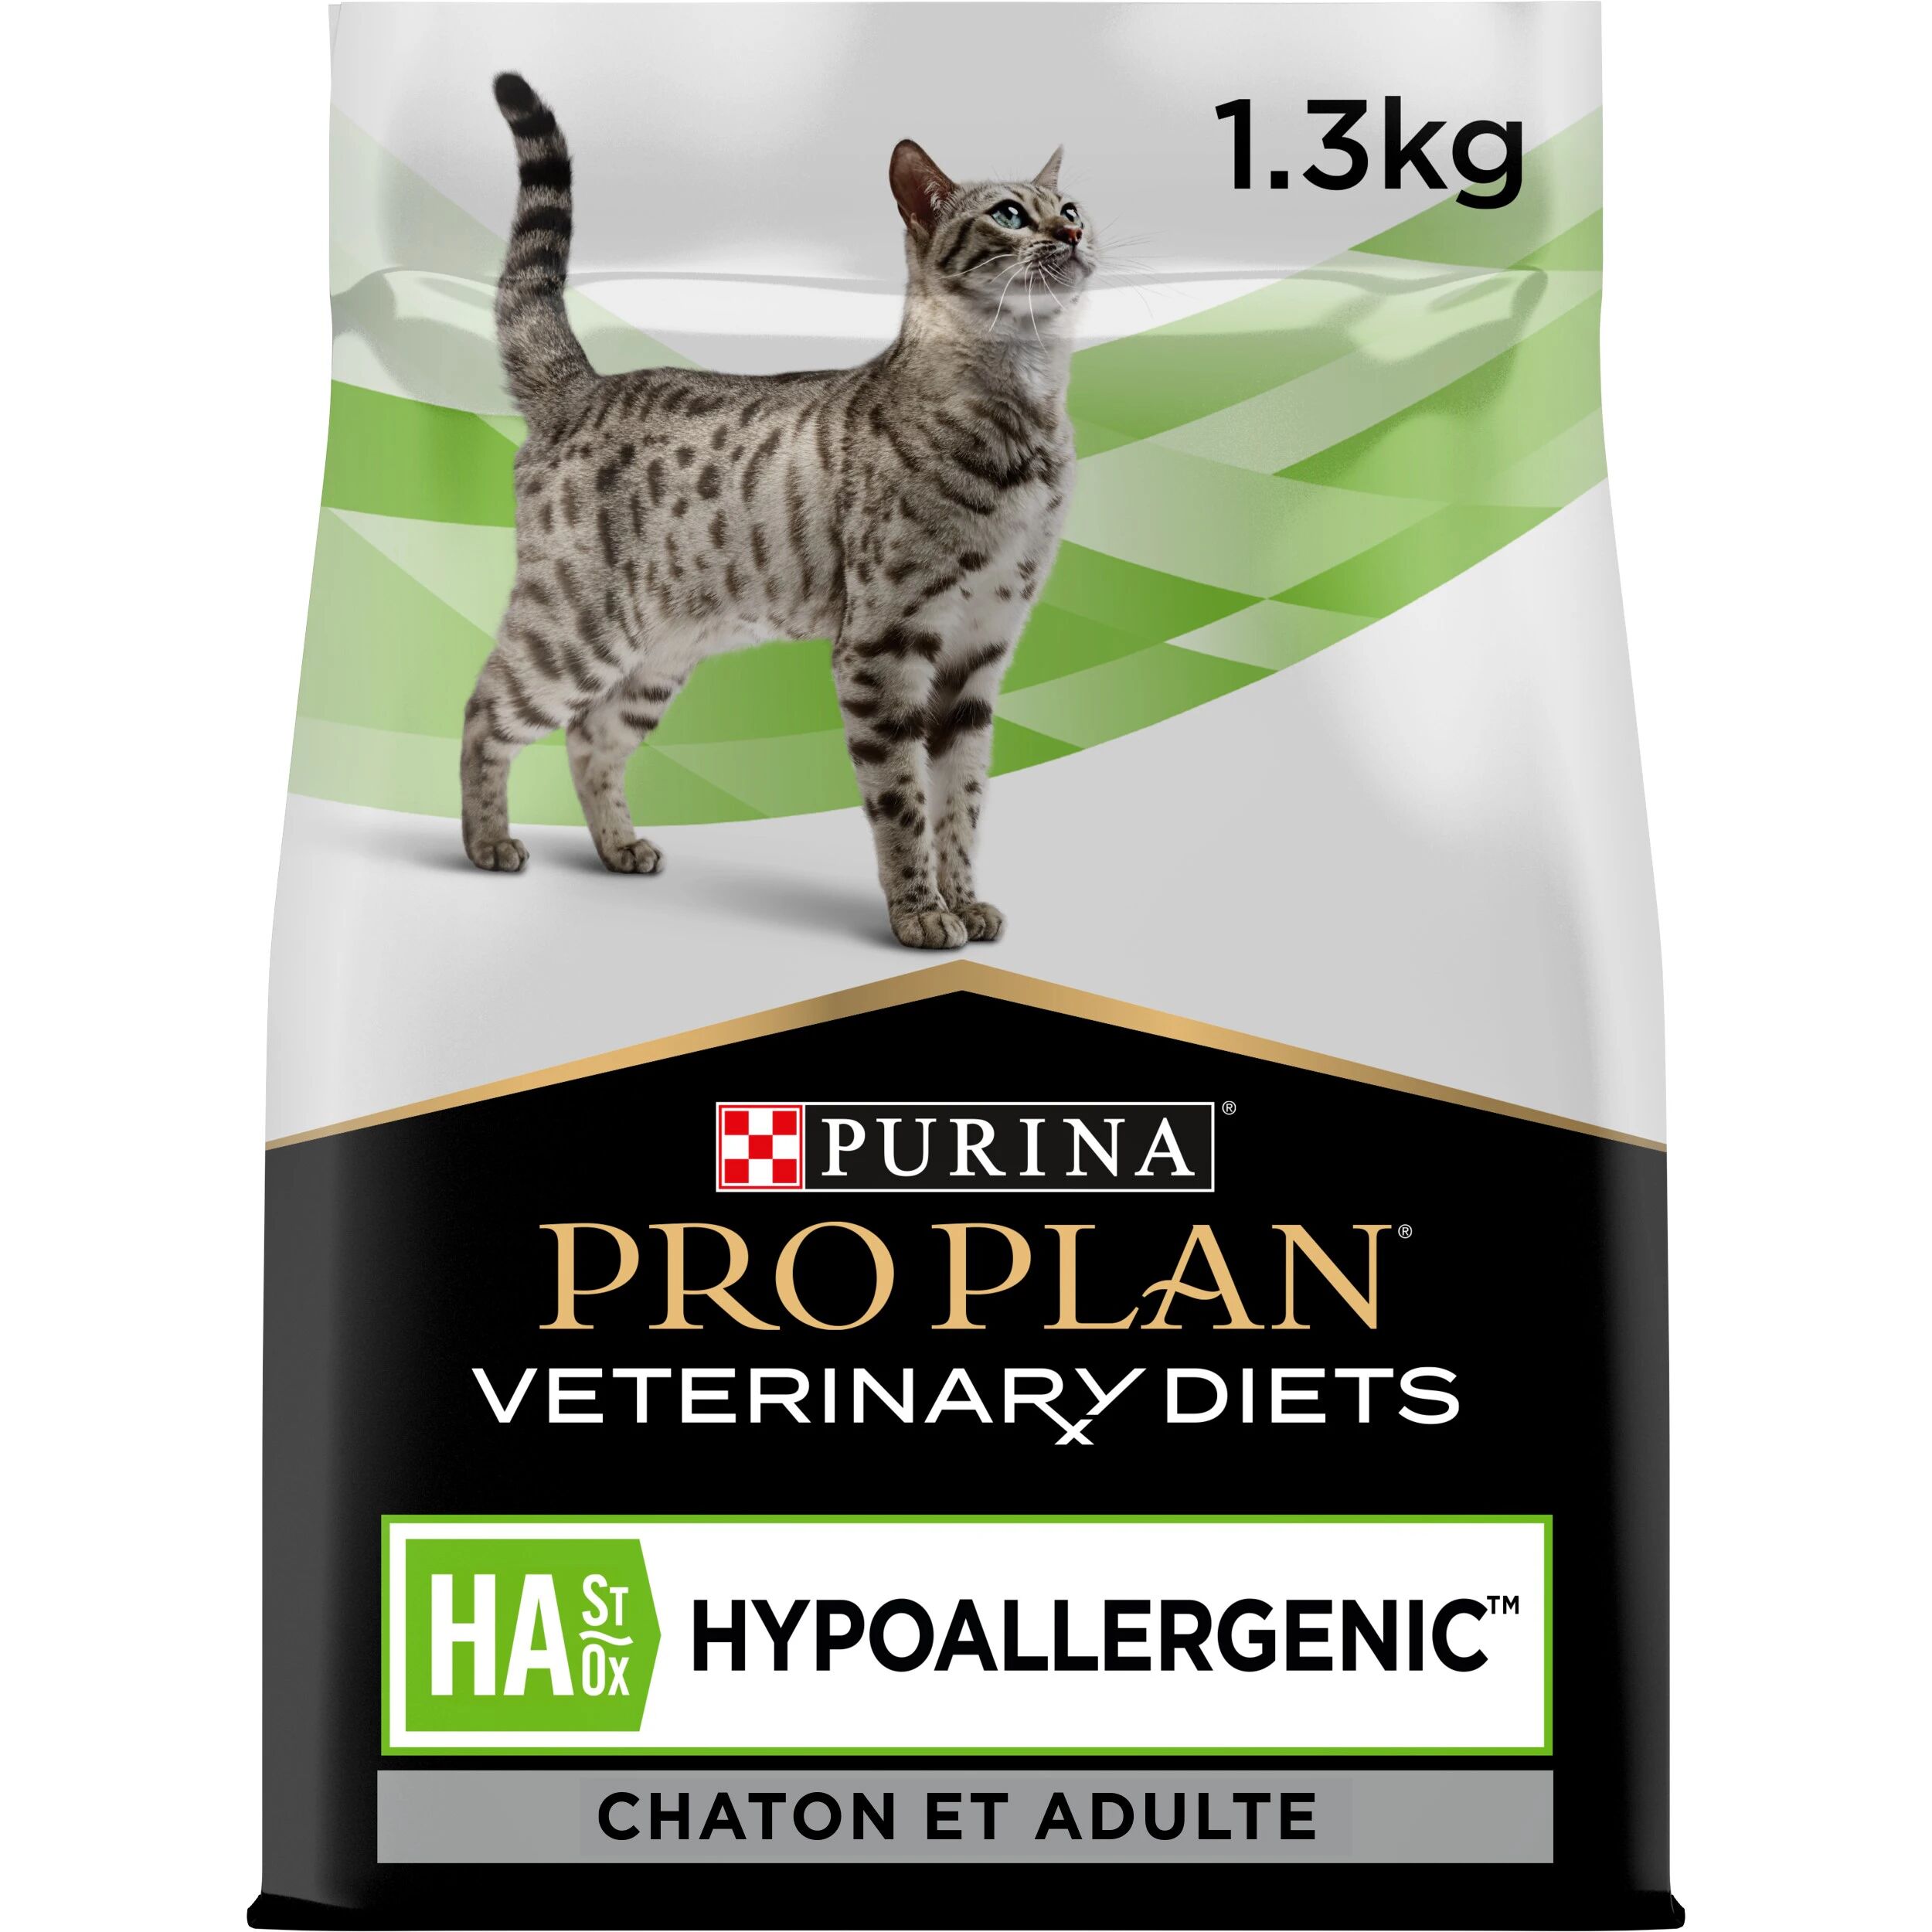 Purina Pro Plan veterinary diet HA 1,3Kg